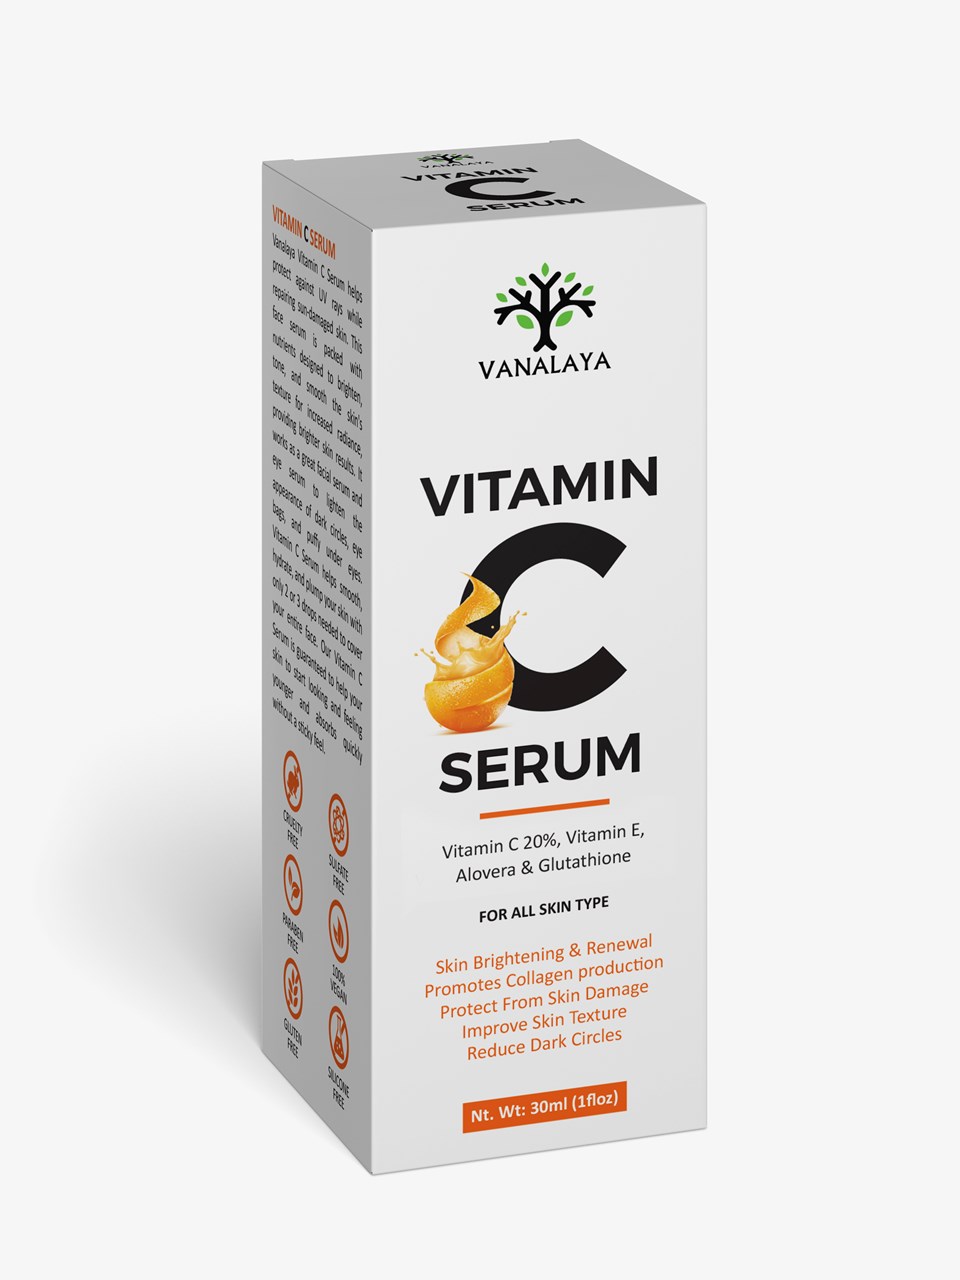 Picture of Vanalya Vitamin C Serum Skin Clearing Serum - For Anti-Aging Skin Repair, Dark Circle, Brightening, Supercharged Face Serum 1 FL Oz - 30 ML